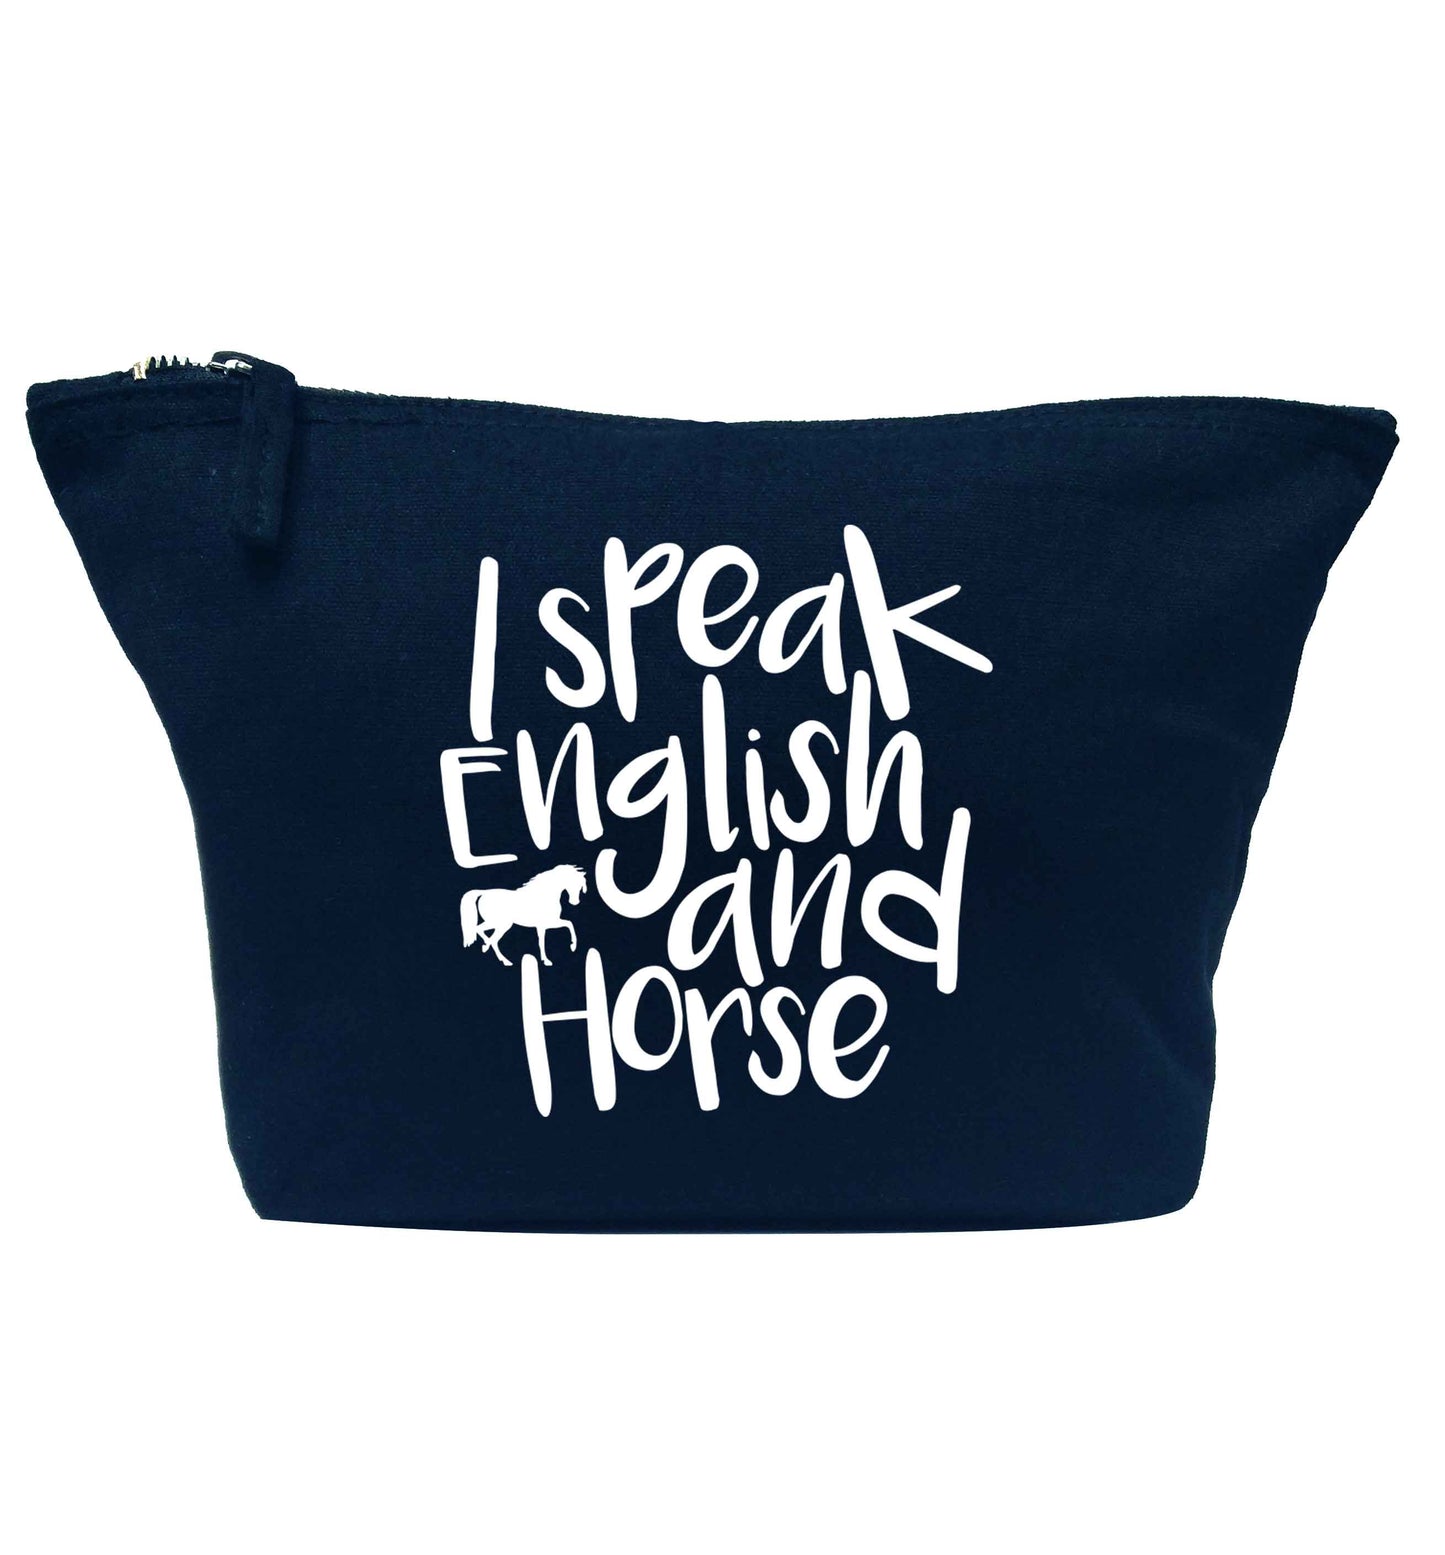 I speak English and horse navy makeup bag